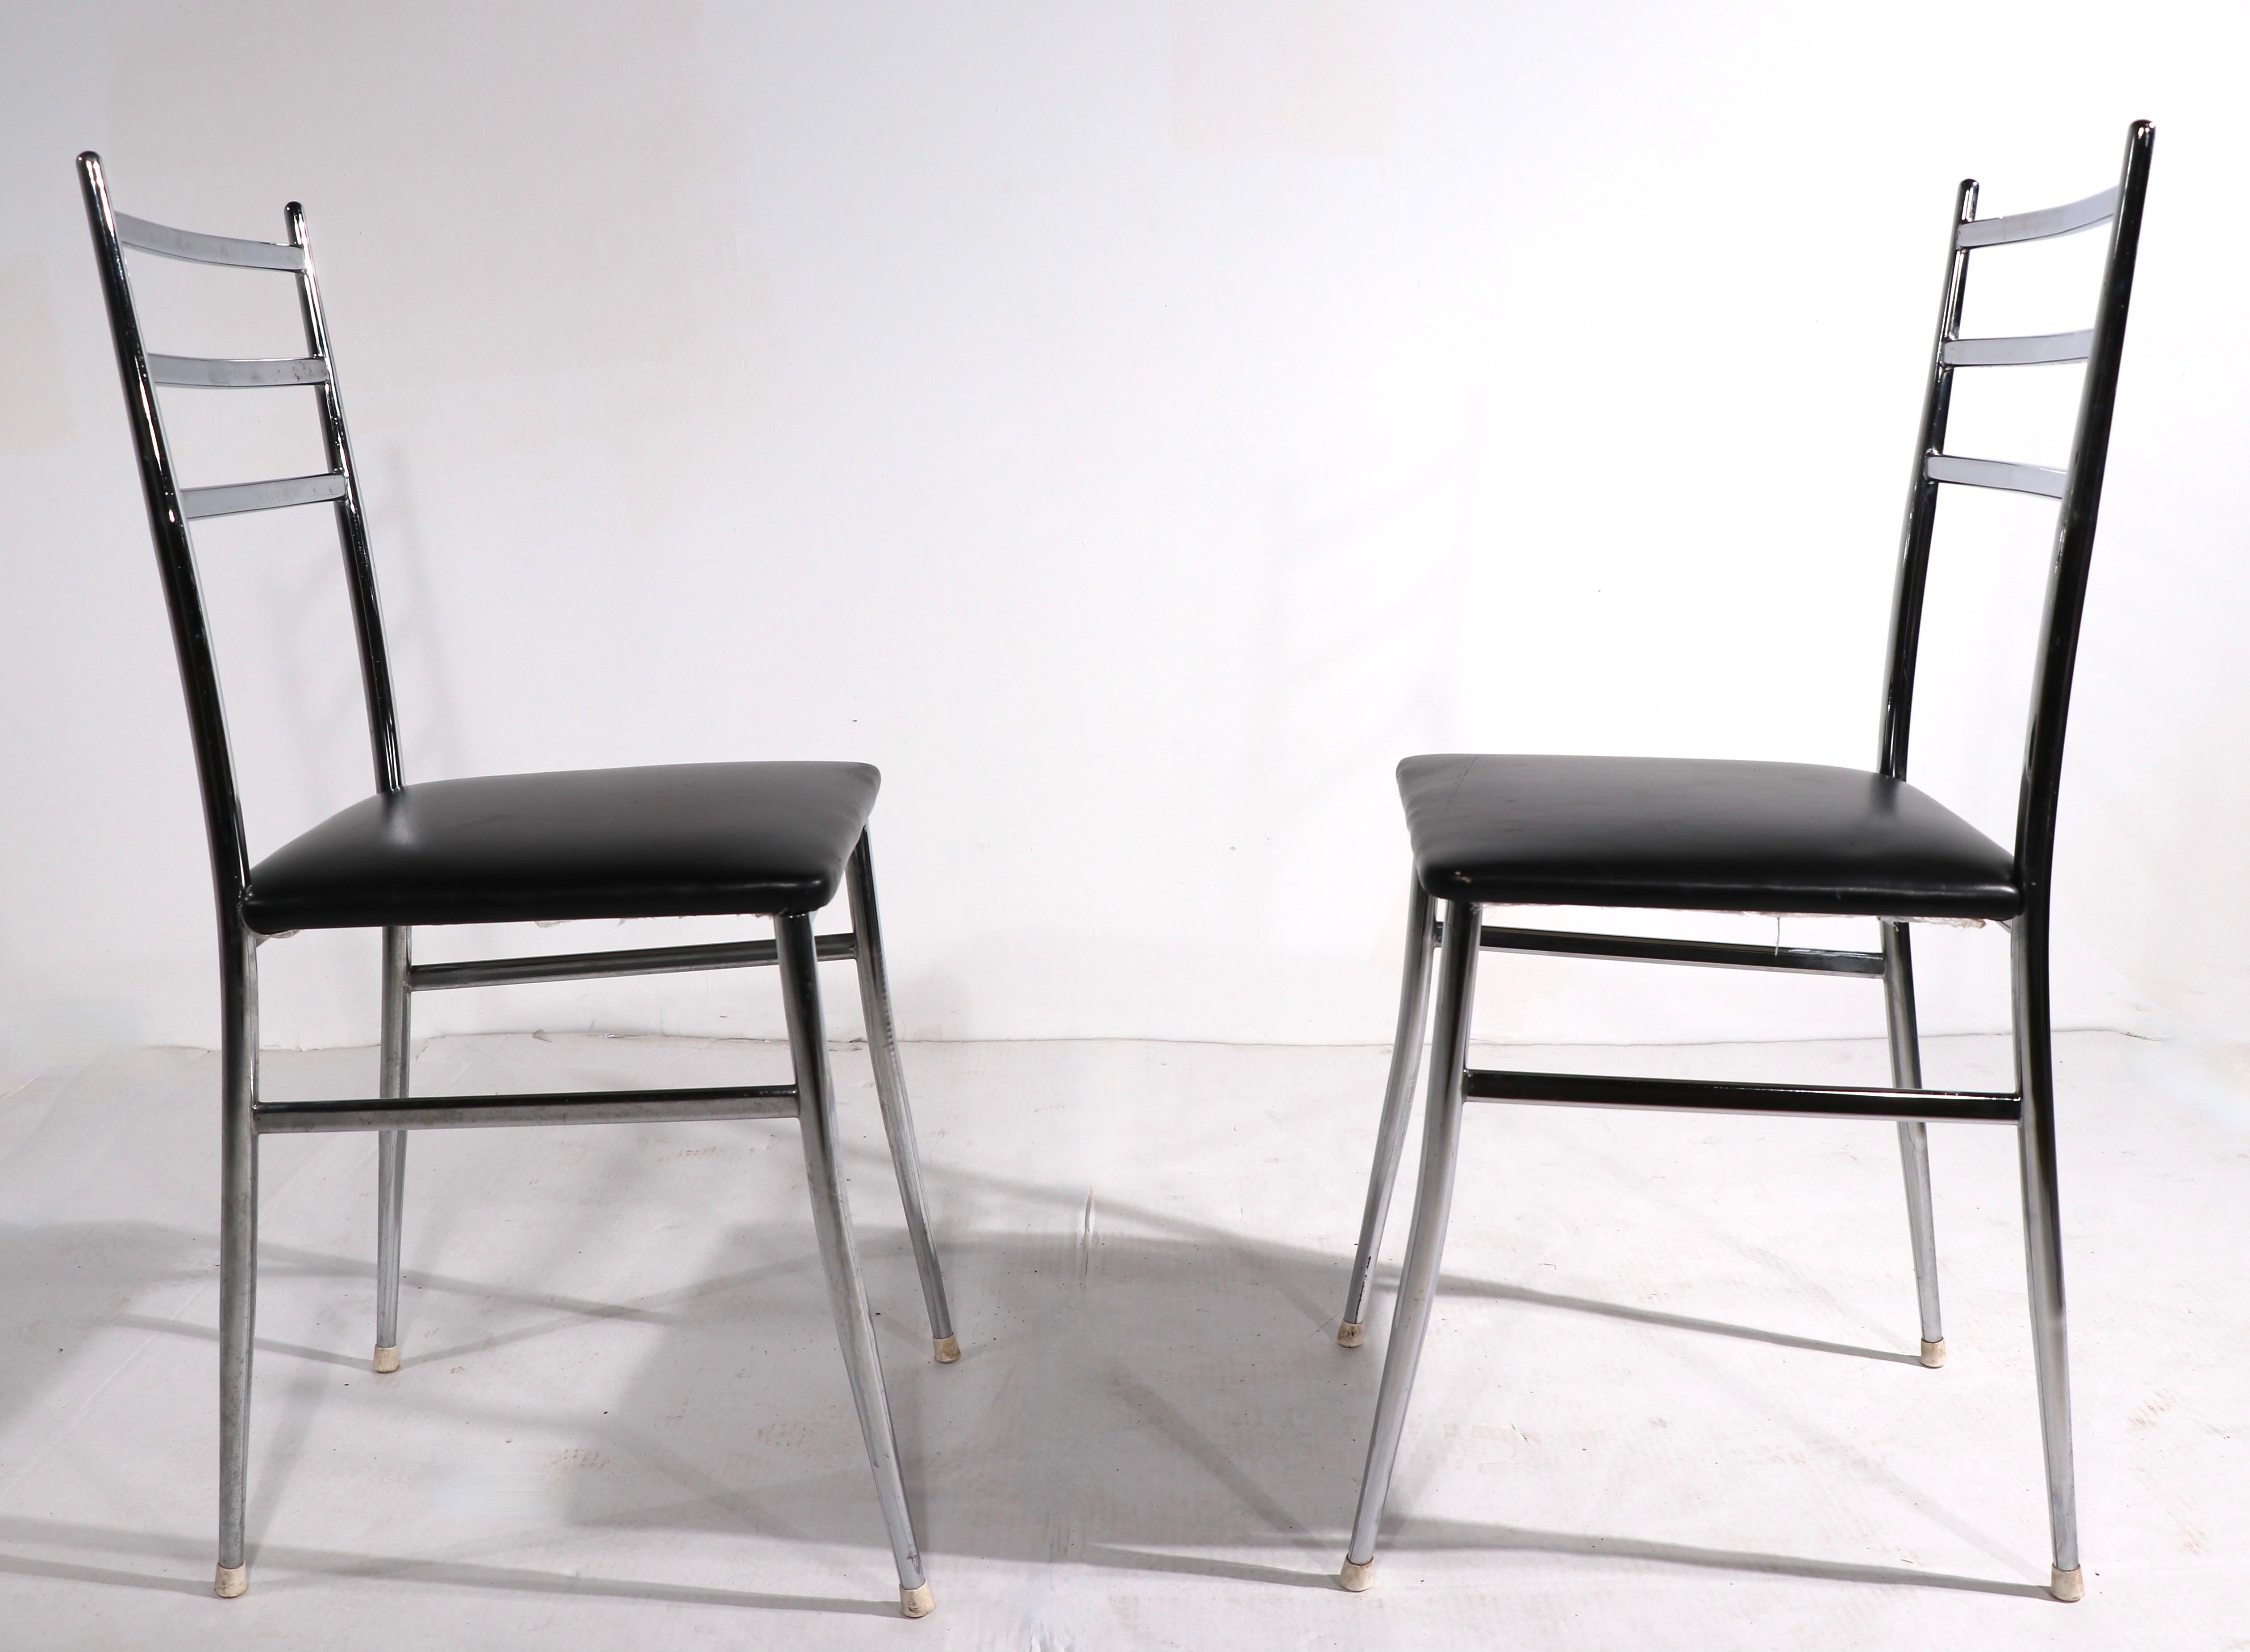 Steel Pr. of Chrome Superleggera Chairs Retailed by W & J Sloane